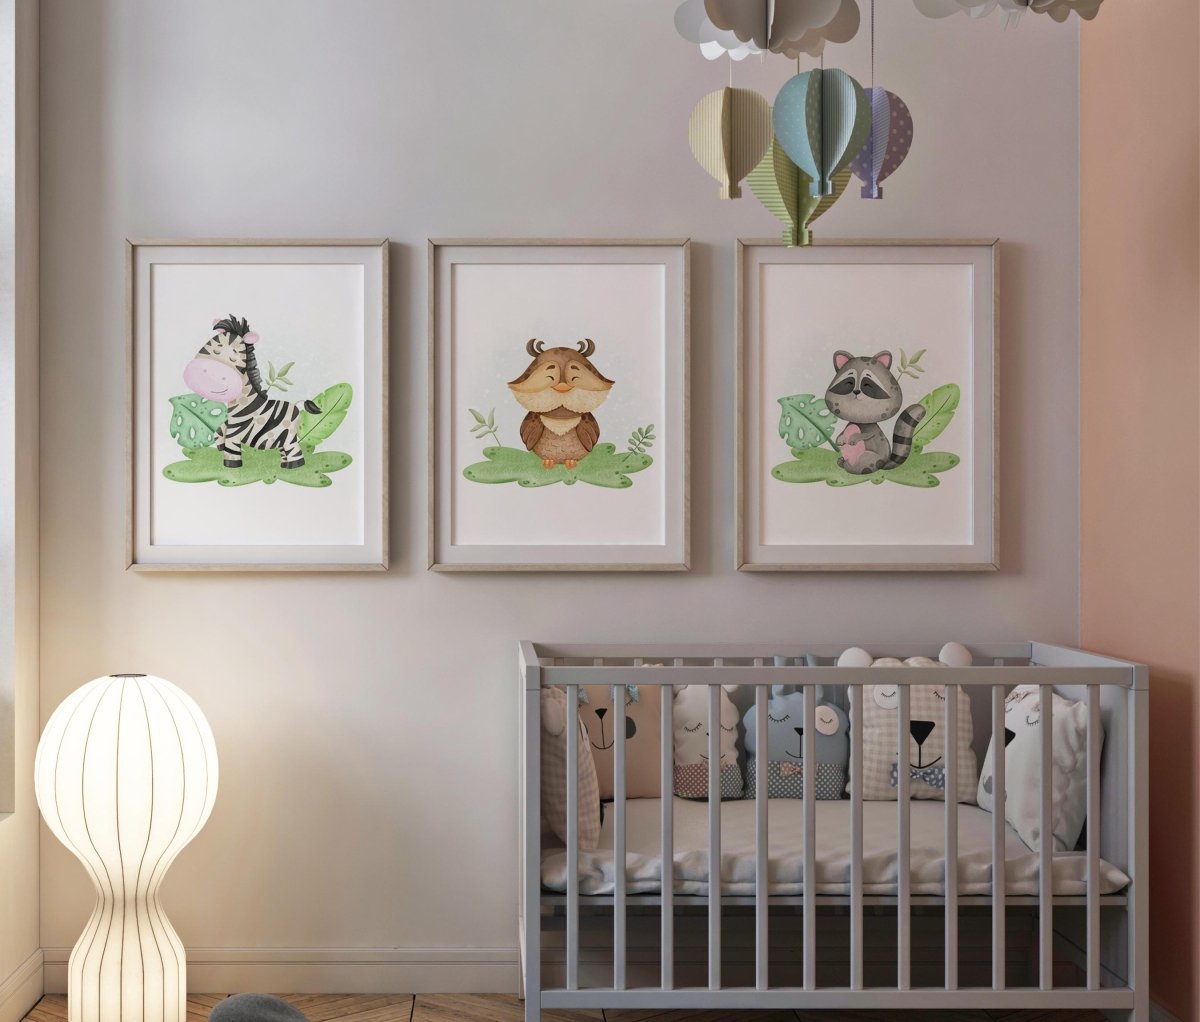 Adorable Set of 12 Safari Animal Prints - Safari Baby Shower or Birthday Gift for a 1 Year Old Girl or Boy | Woodland Animals - Zeinnas